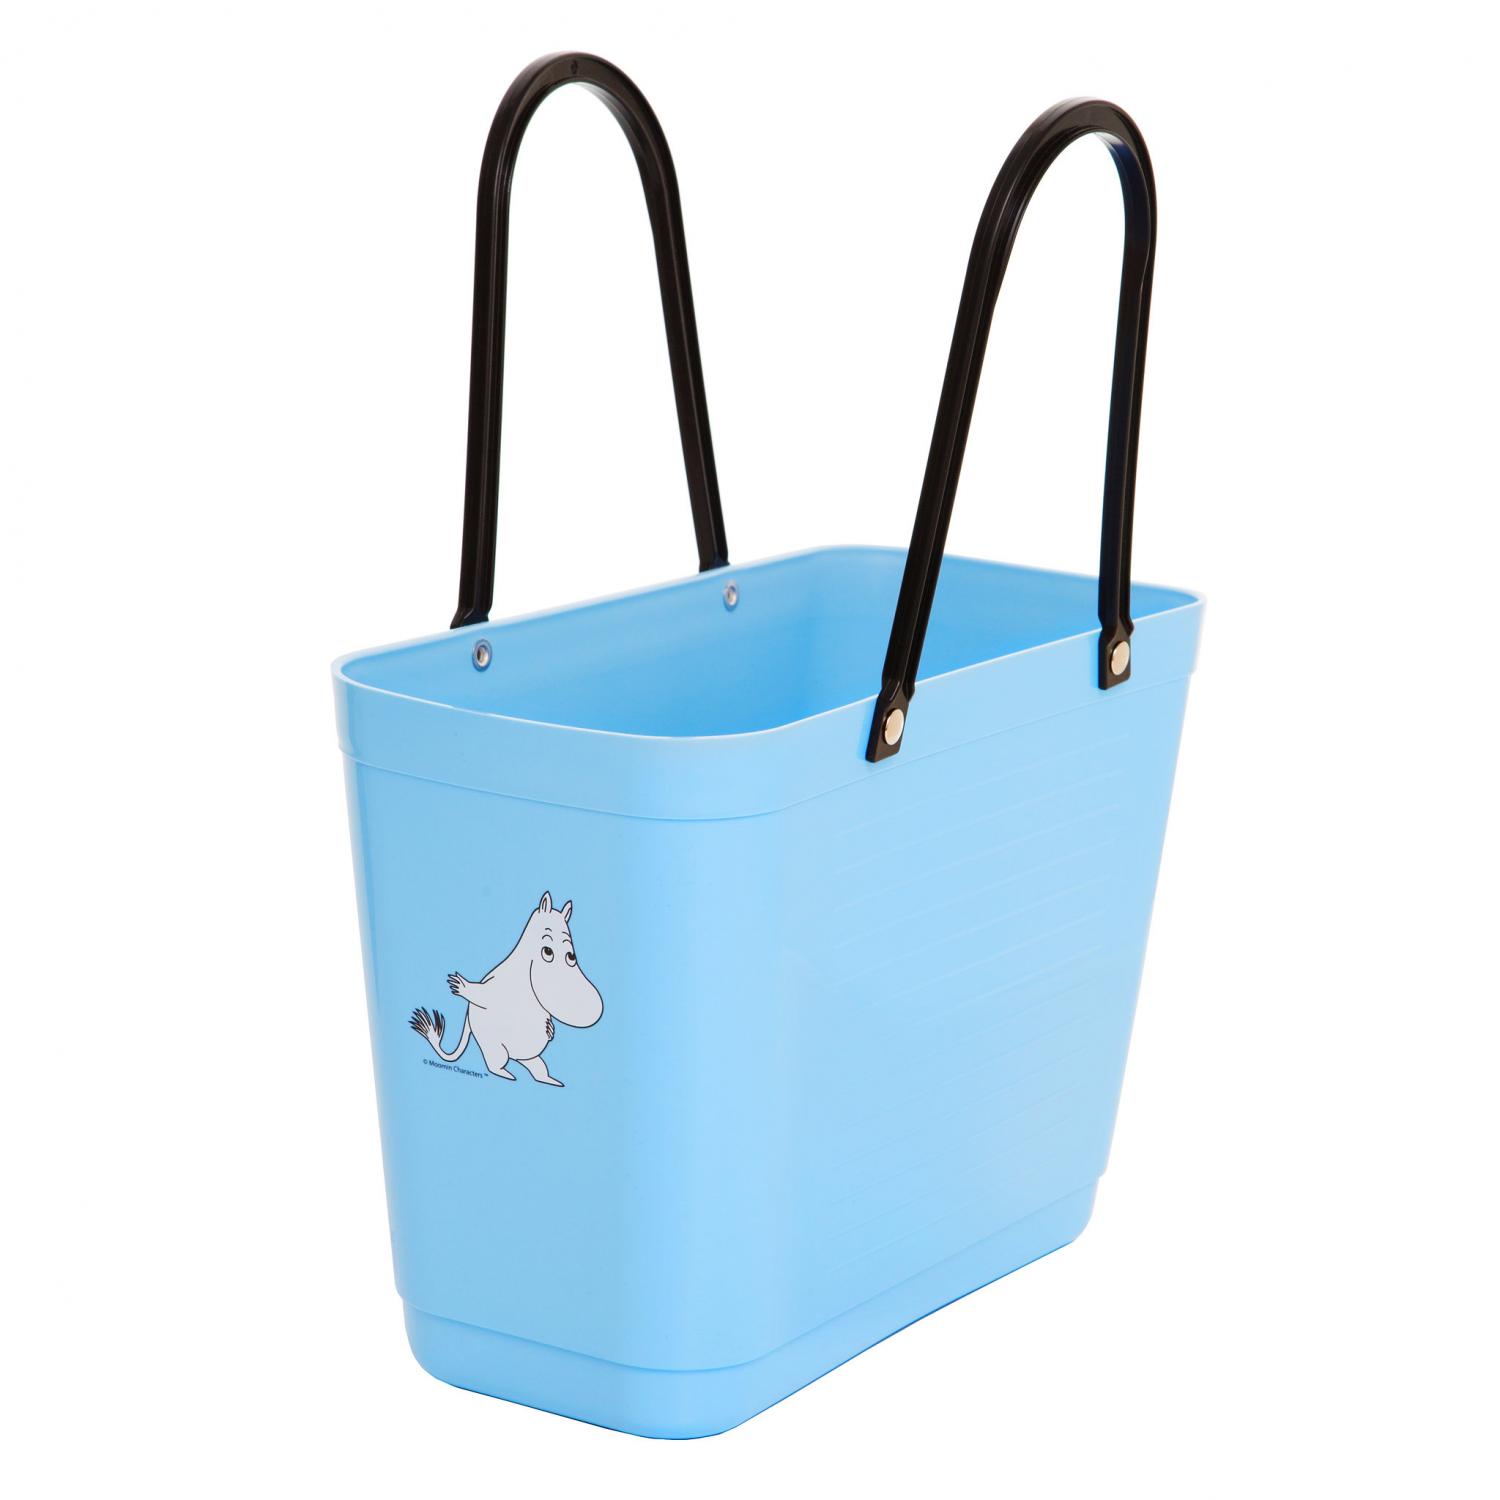 Hinza bag Small Light Blue - Green Plastic, Moomintroll